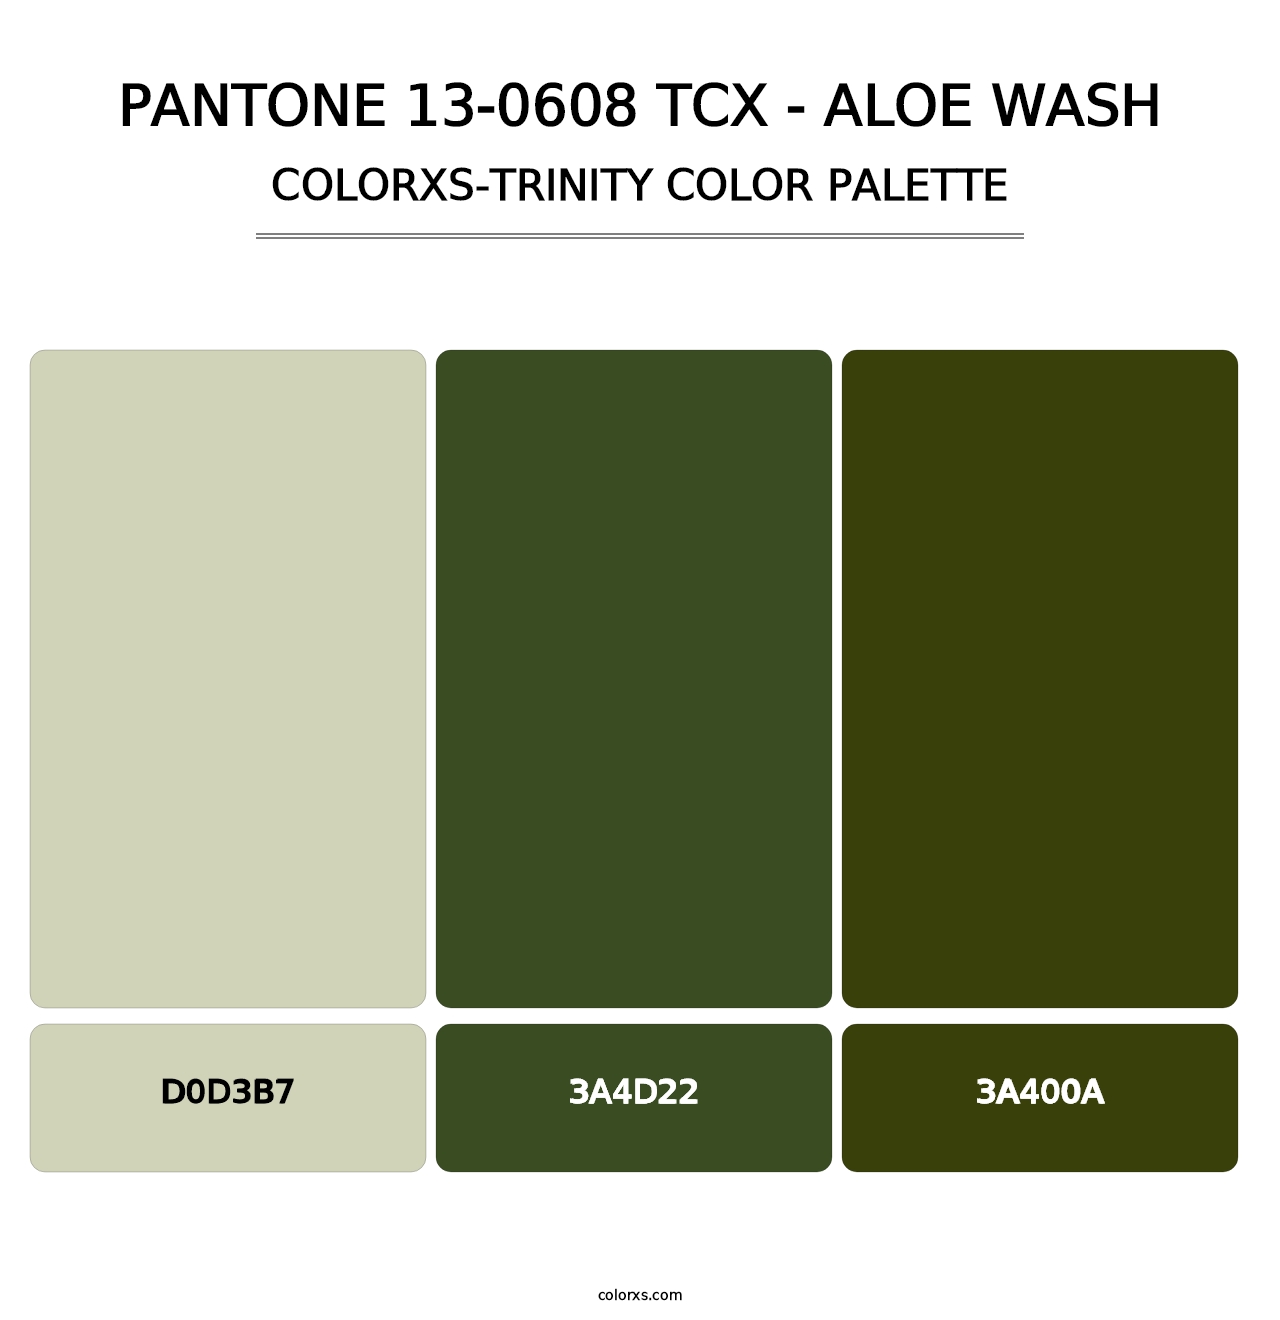 PANTONE 13-0608 TCX - Aloe Wash - Colorxs Trinity Palette